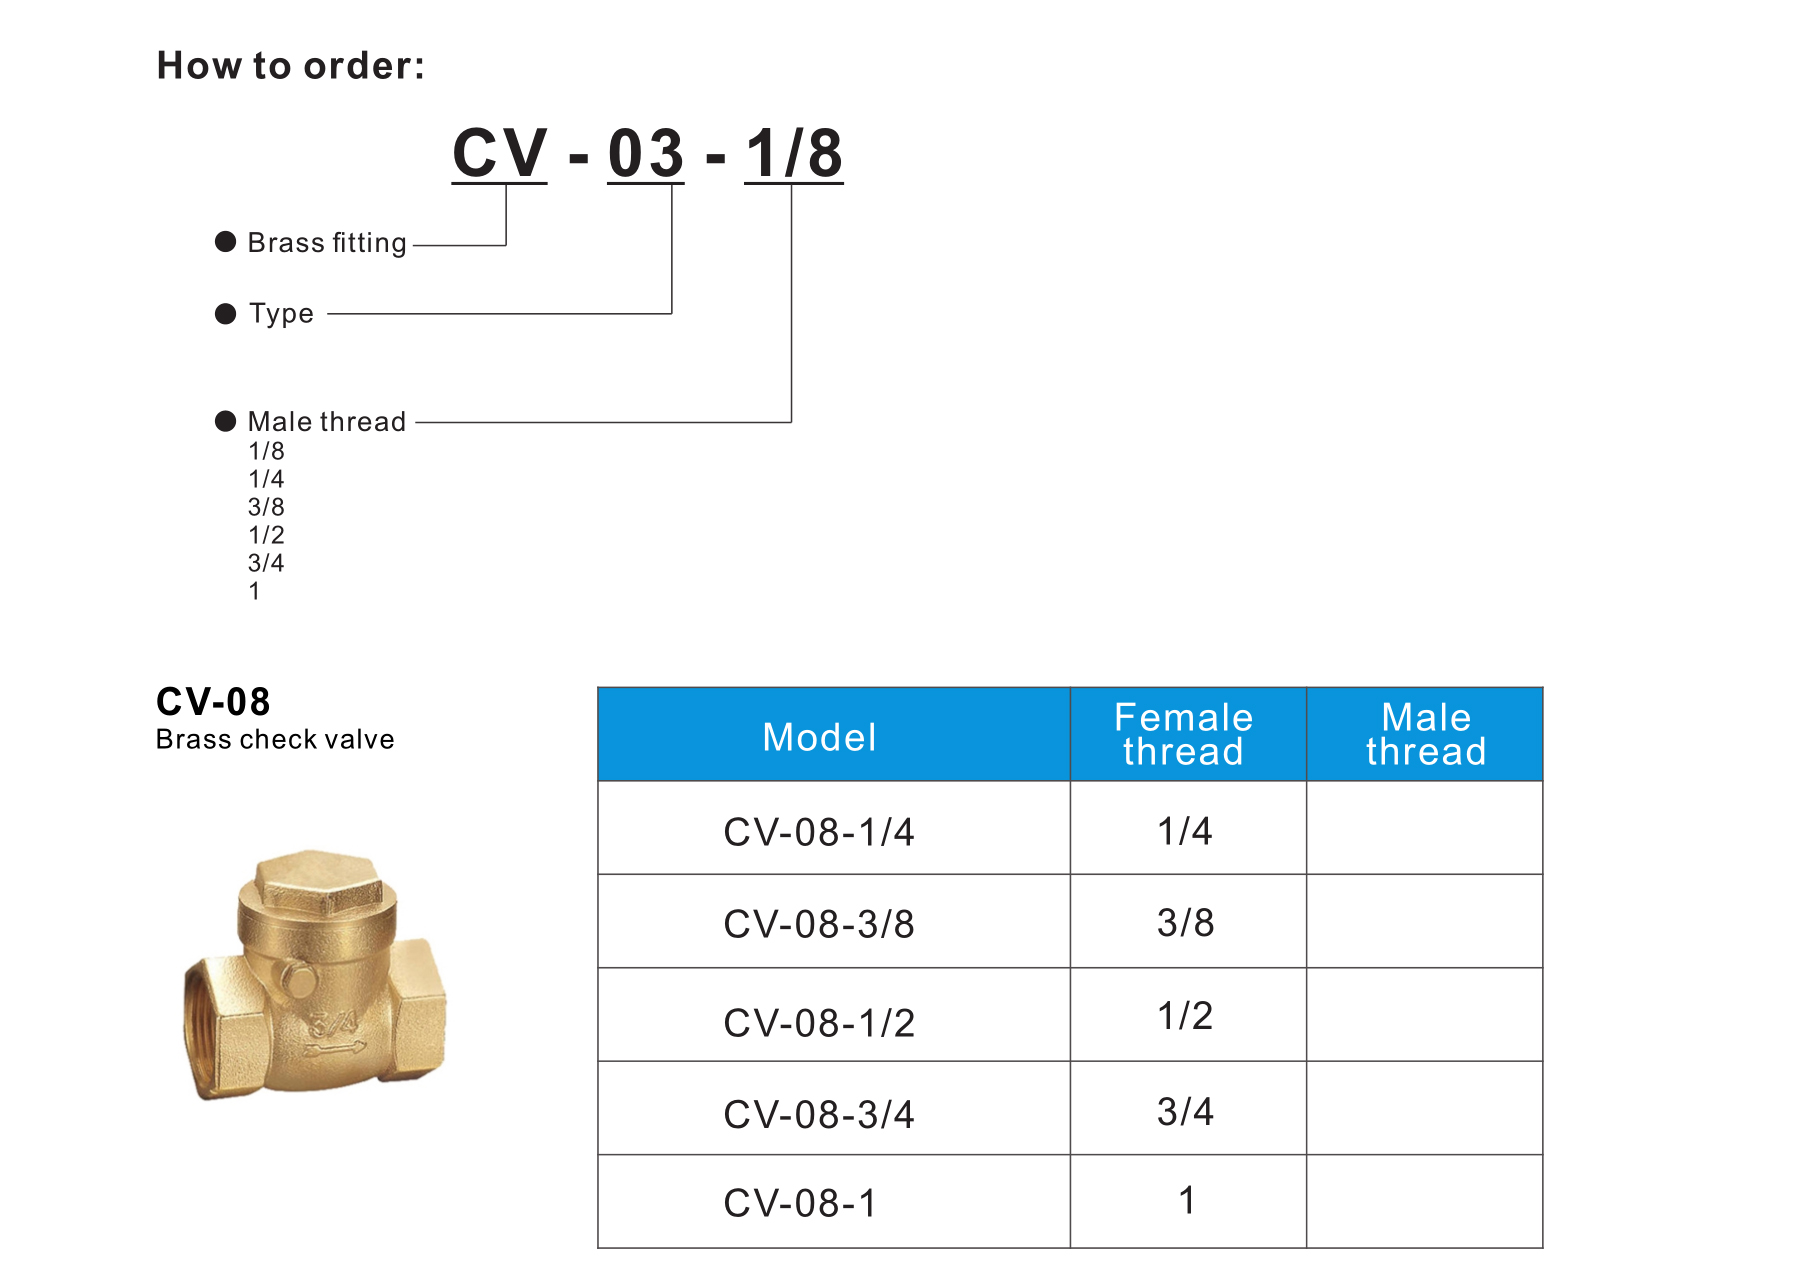 CV-08 Brass check valve